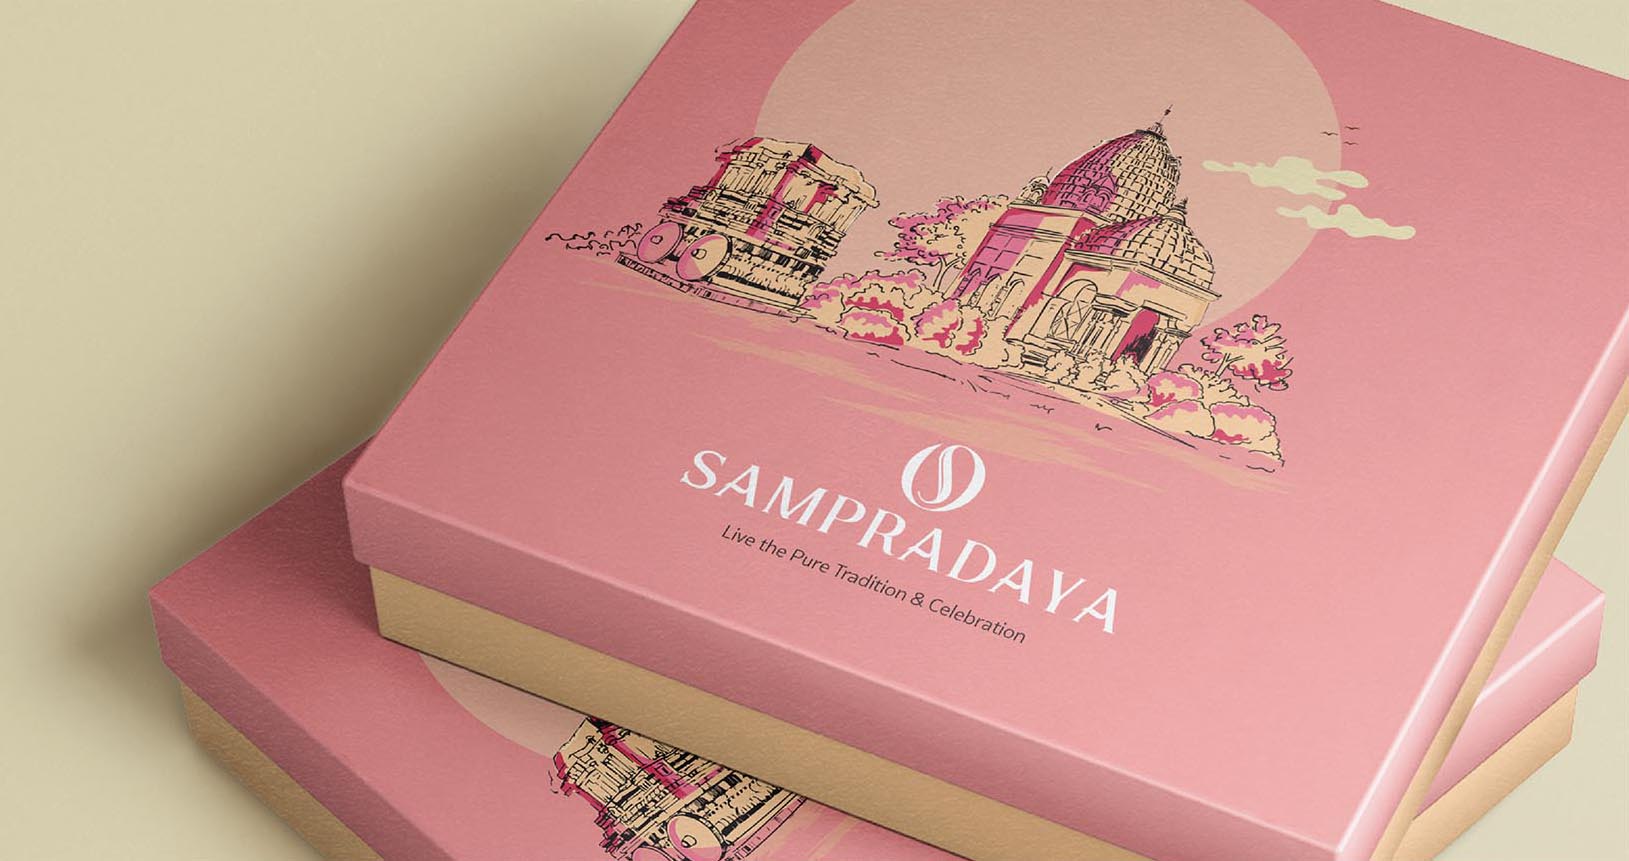 Sampradaya Foods